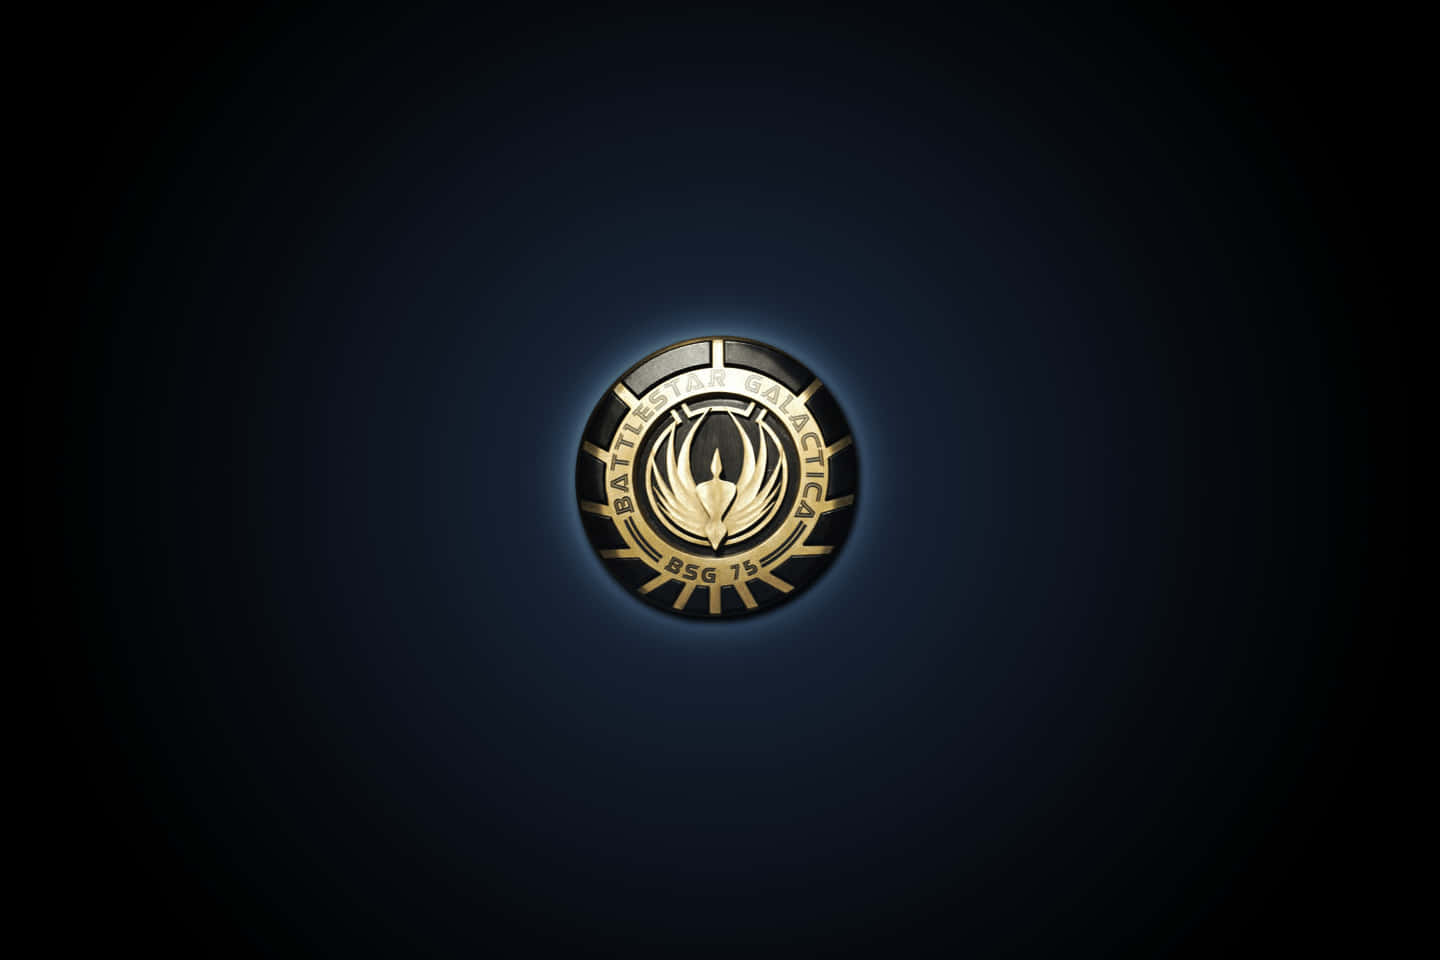 Battlestar Galactica Emblem Black Wallpaper